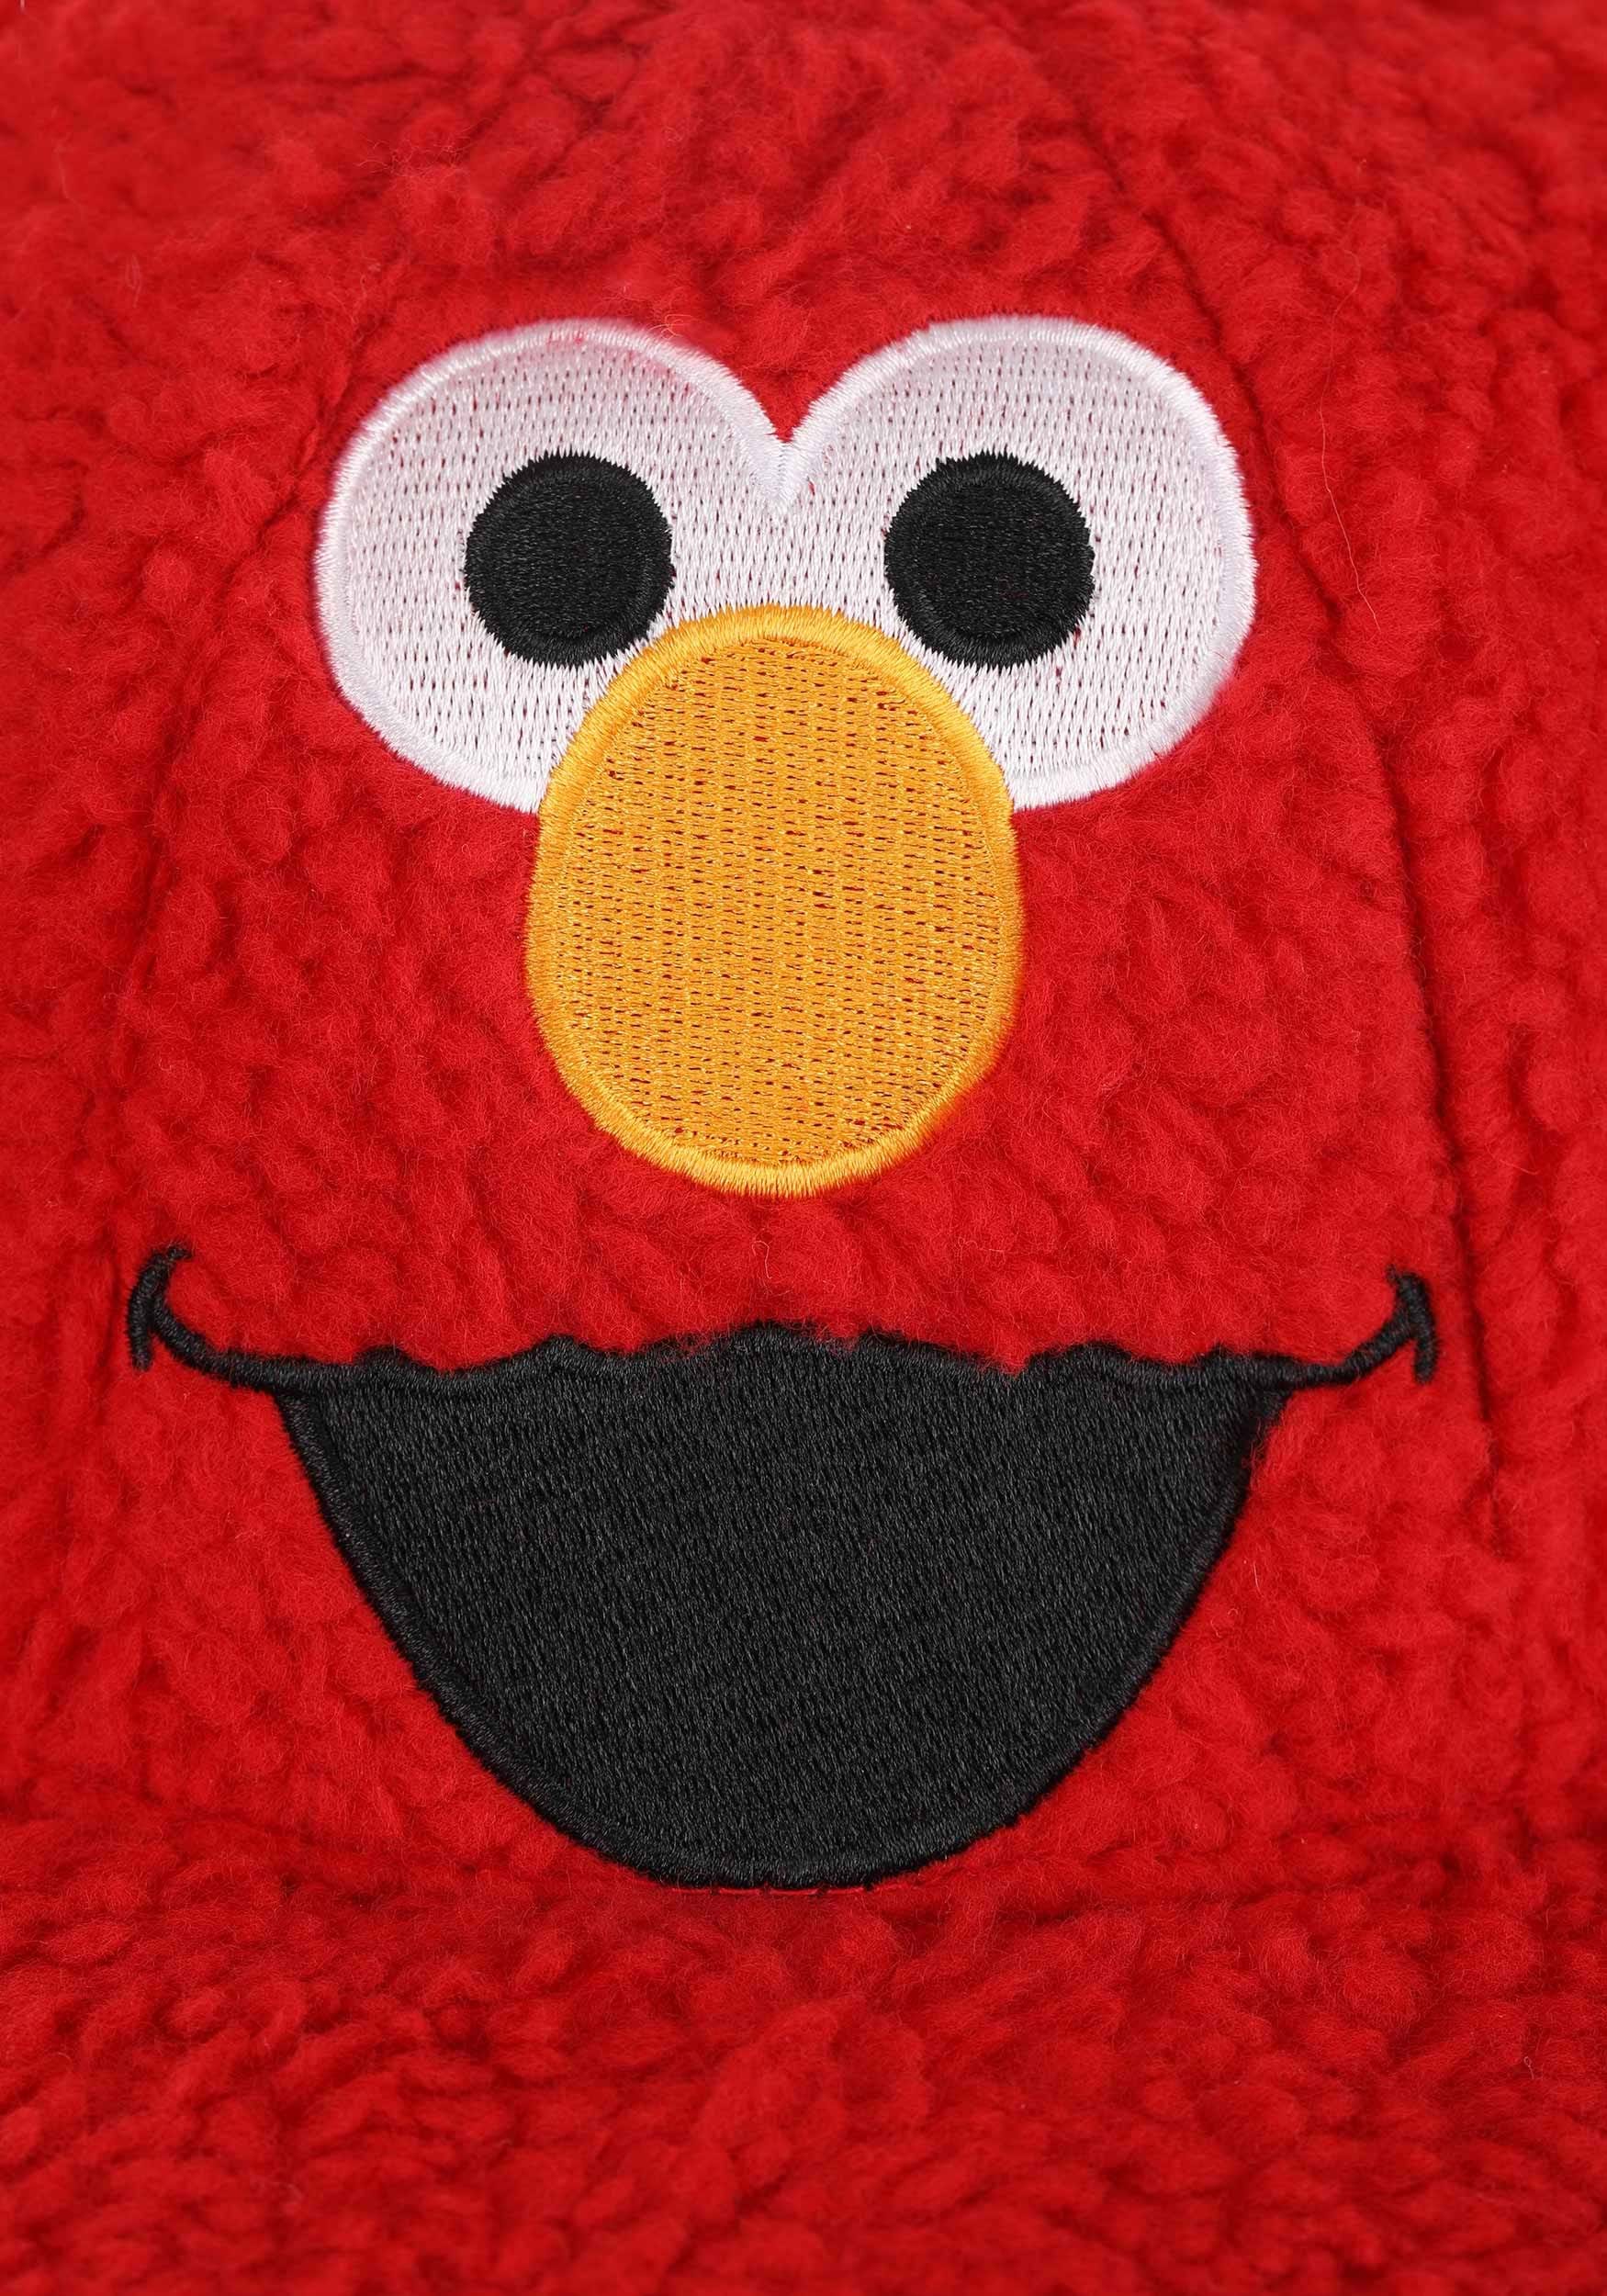 Elmo Sesame Street Fuzzy Cap